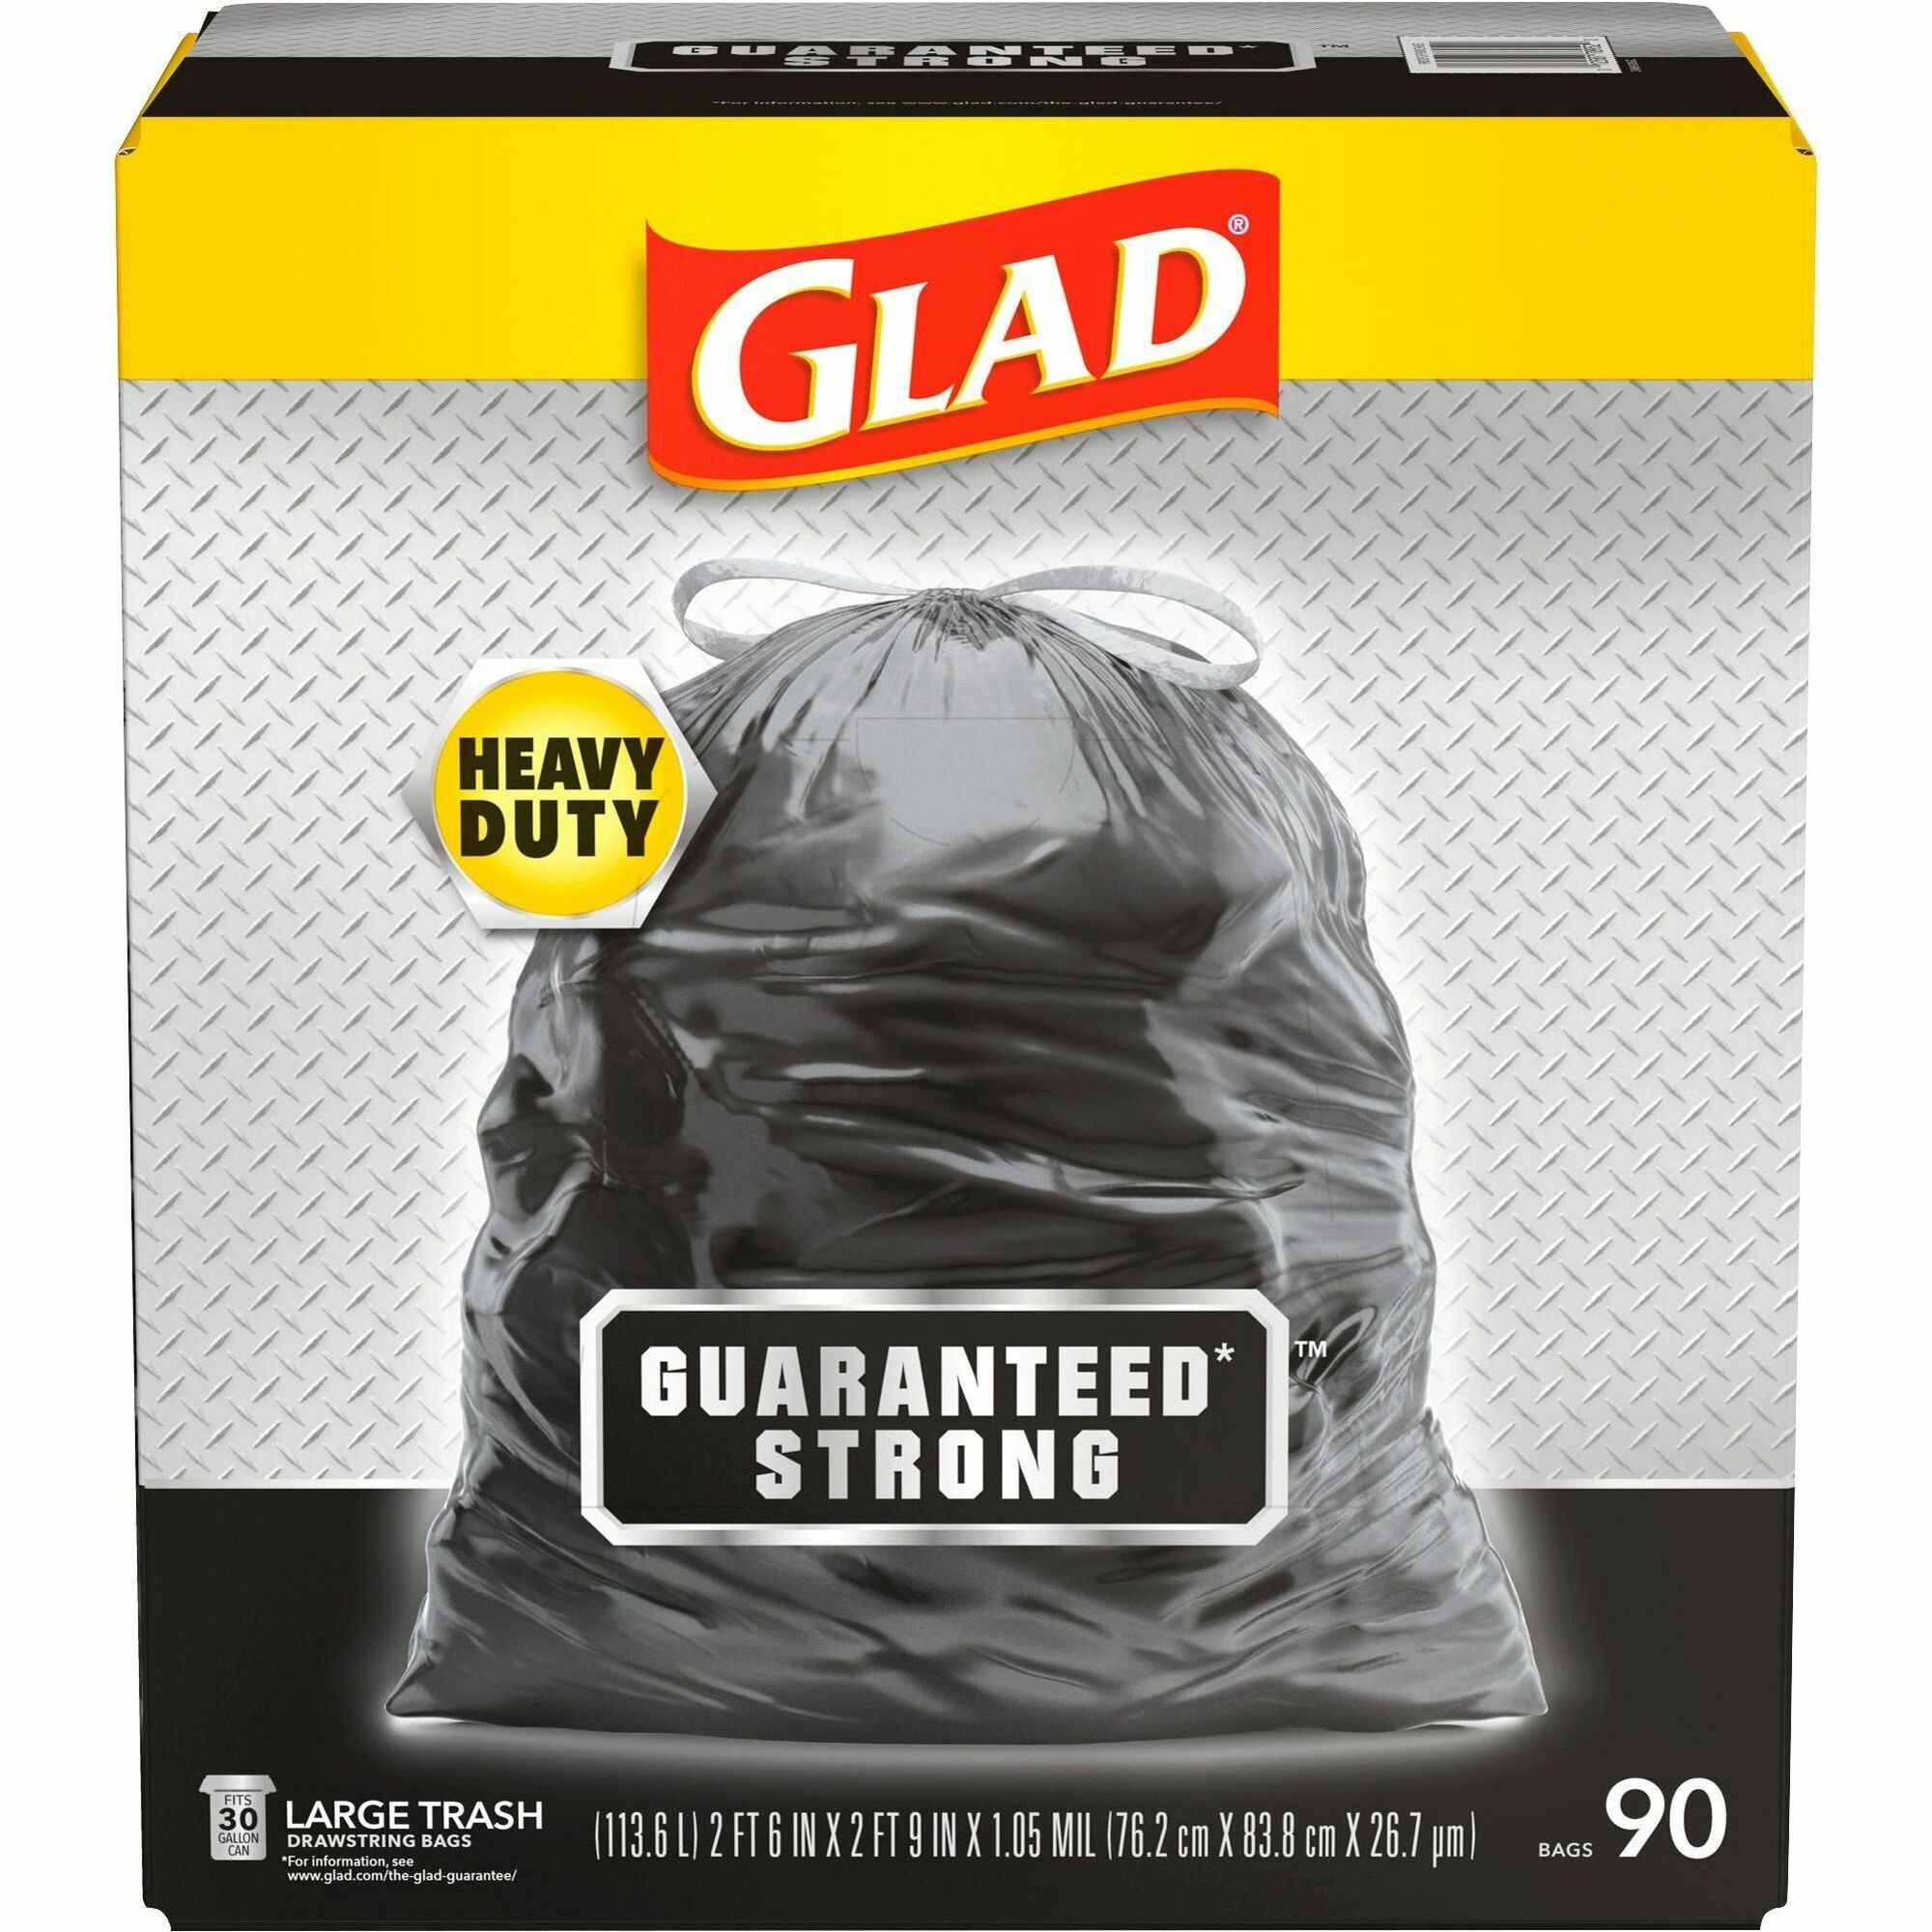 Glad 78526 Kitchen Drawstring Trash Bag 13 Gallon, White/Black, Tall,  Regular, (100 per Box, 4